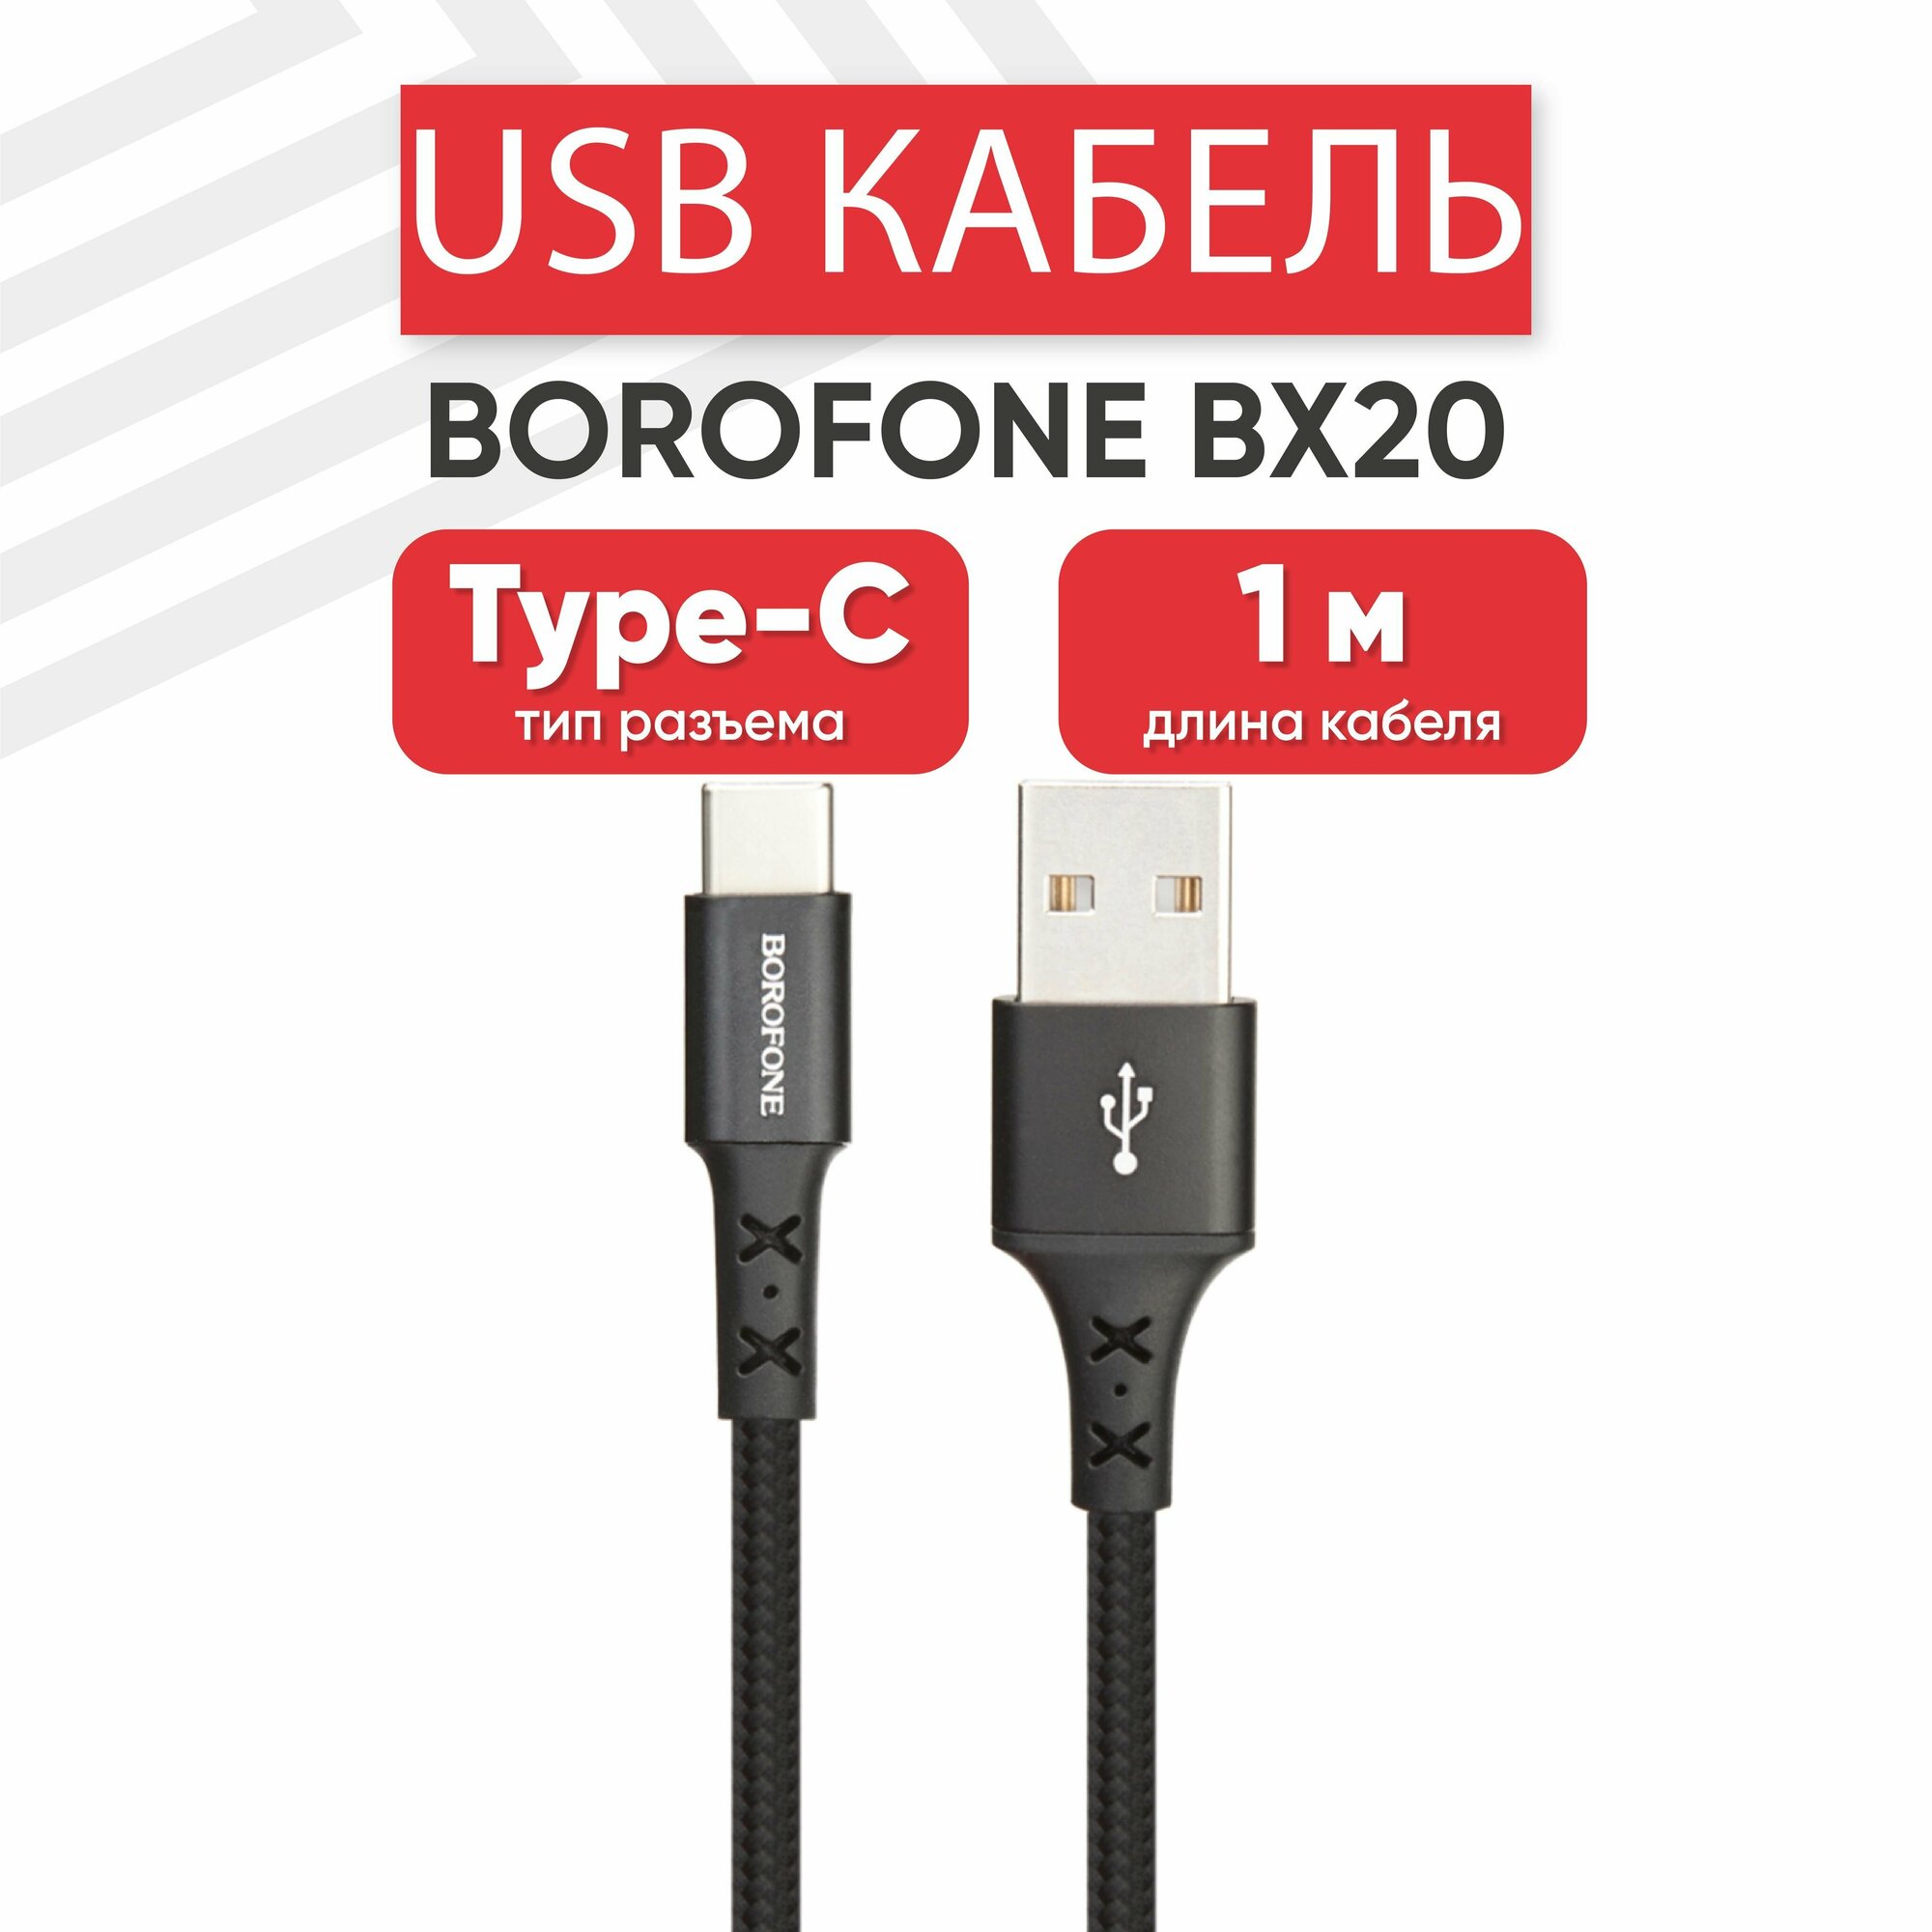 USB кабель Borofone BX20 для зарядки, передачи данных, Type-C, 2А, Fast Charging, 1 метр, нейлон, черный